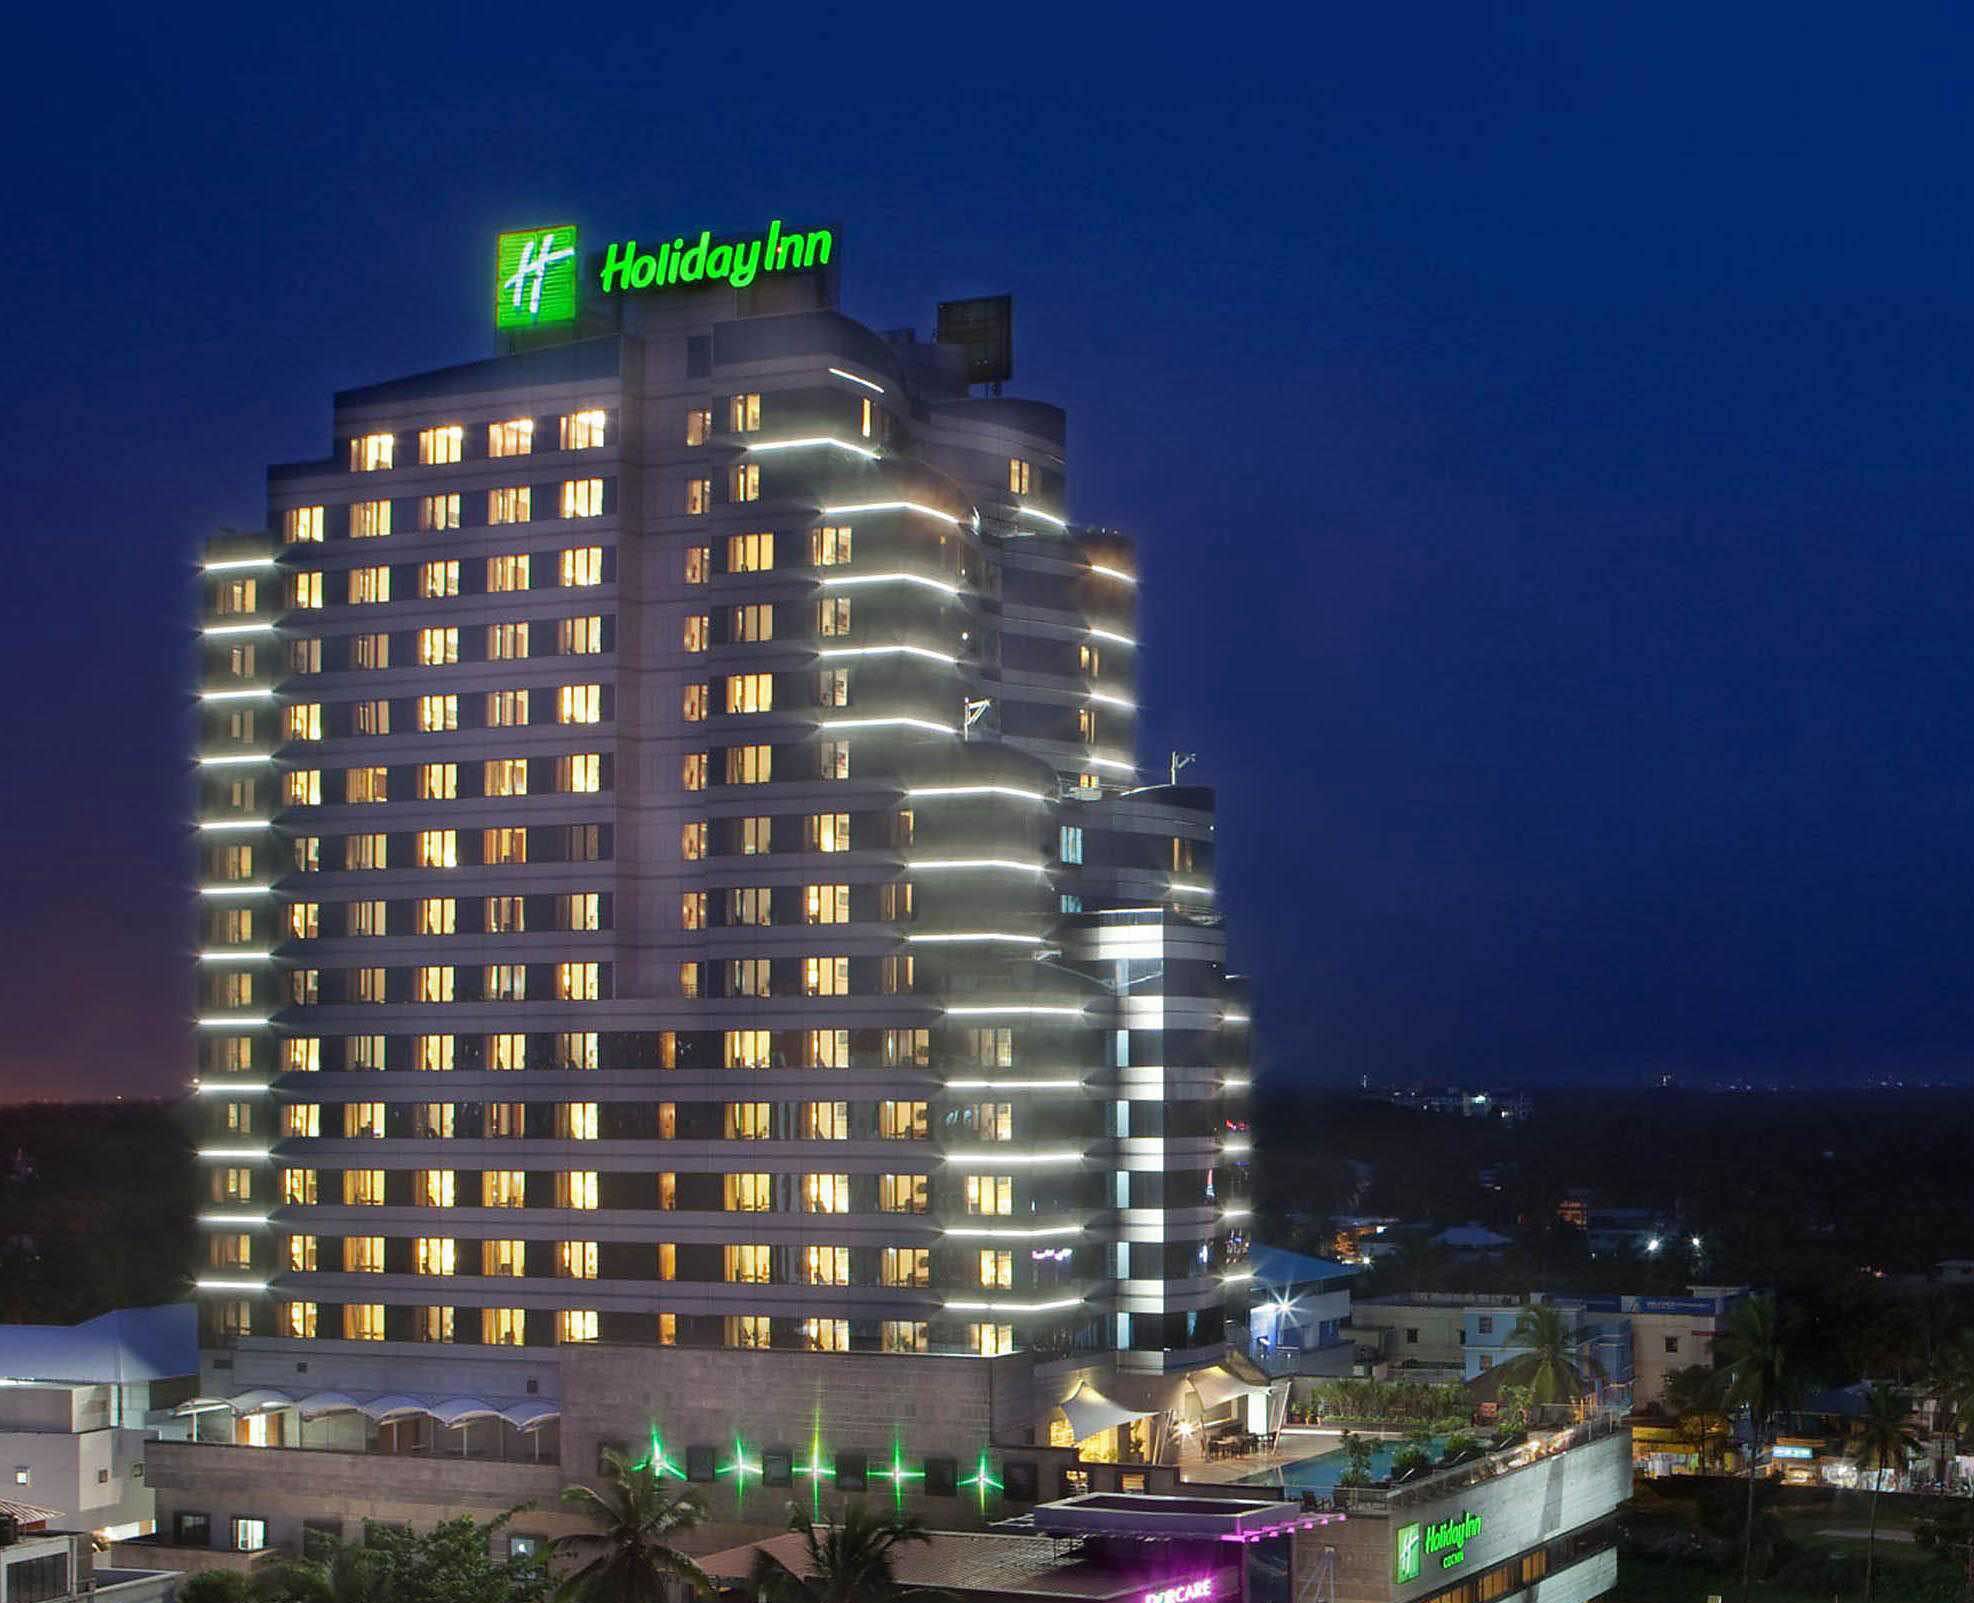 Holiday Inn Hotel | Hospitality Service Provider